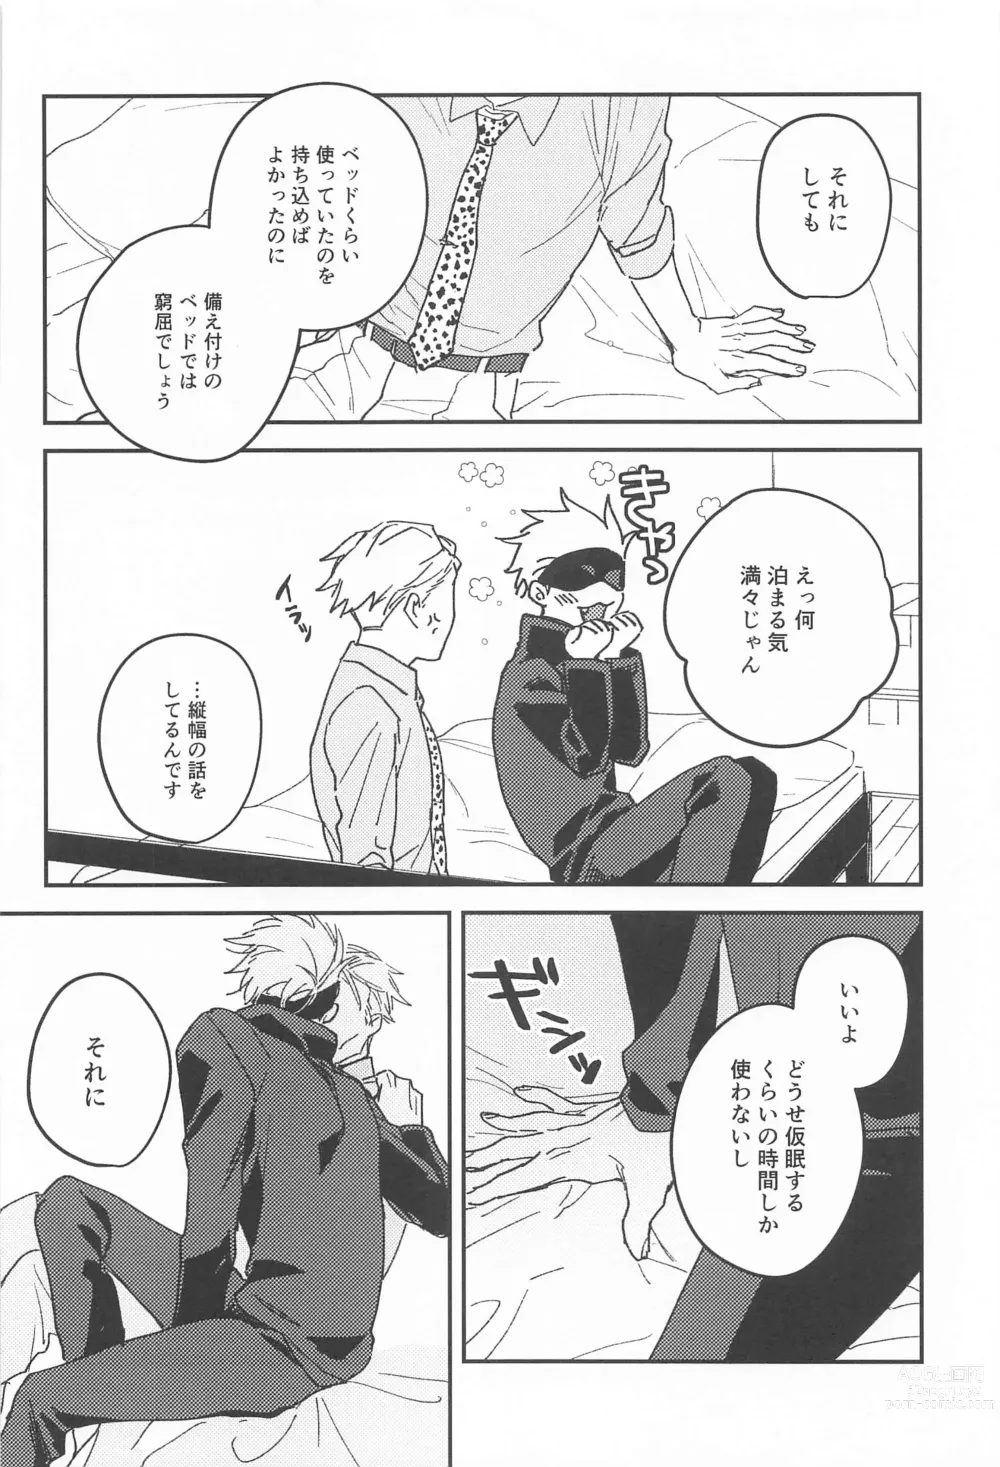 Page 9 of doujinshi 10years